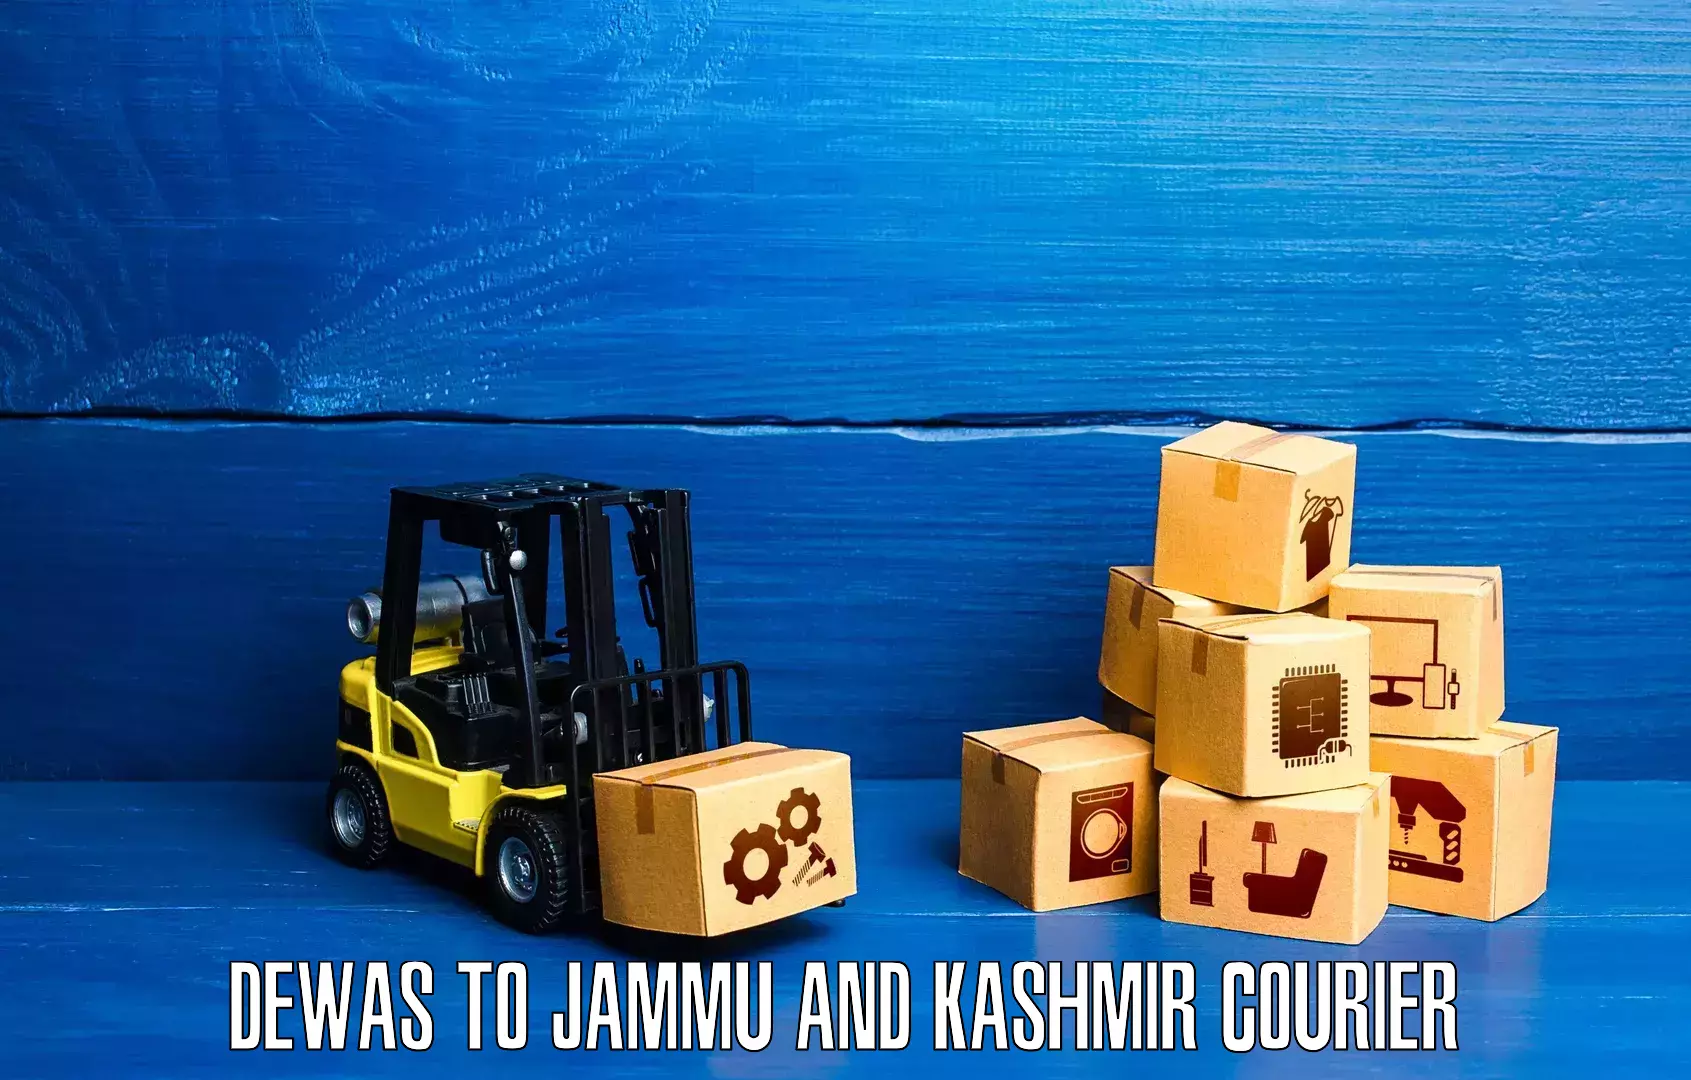 Tech-enabled shipping Dewas to Kargil